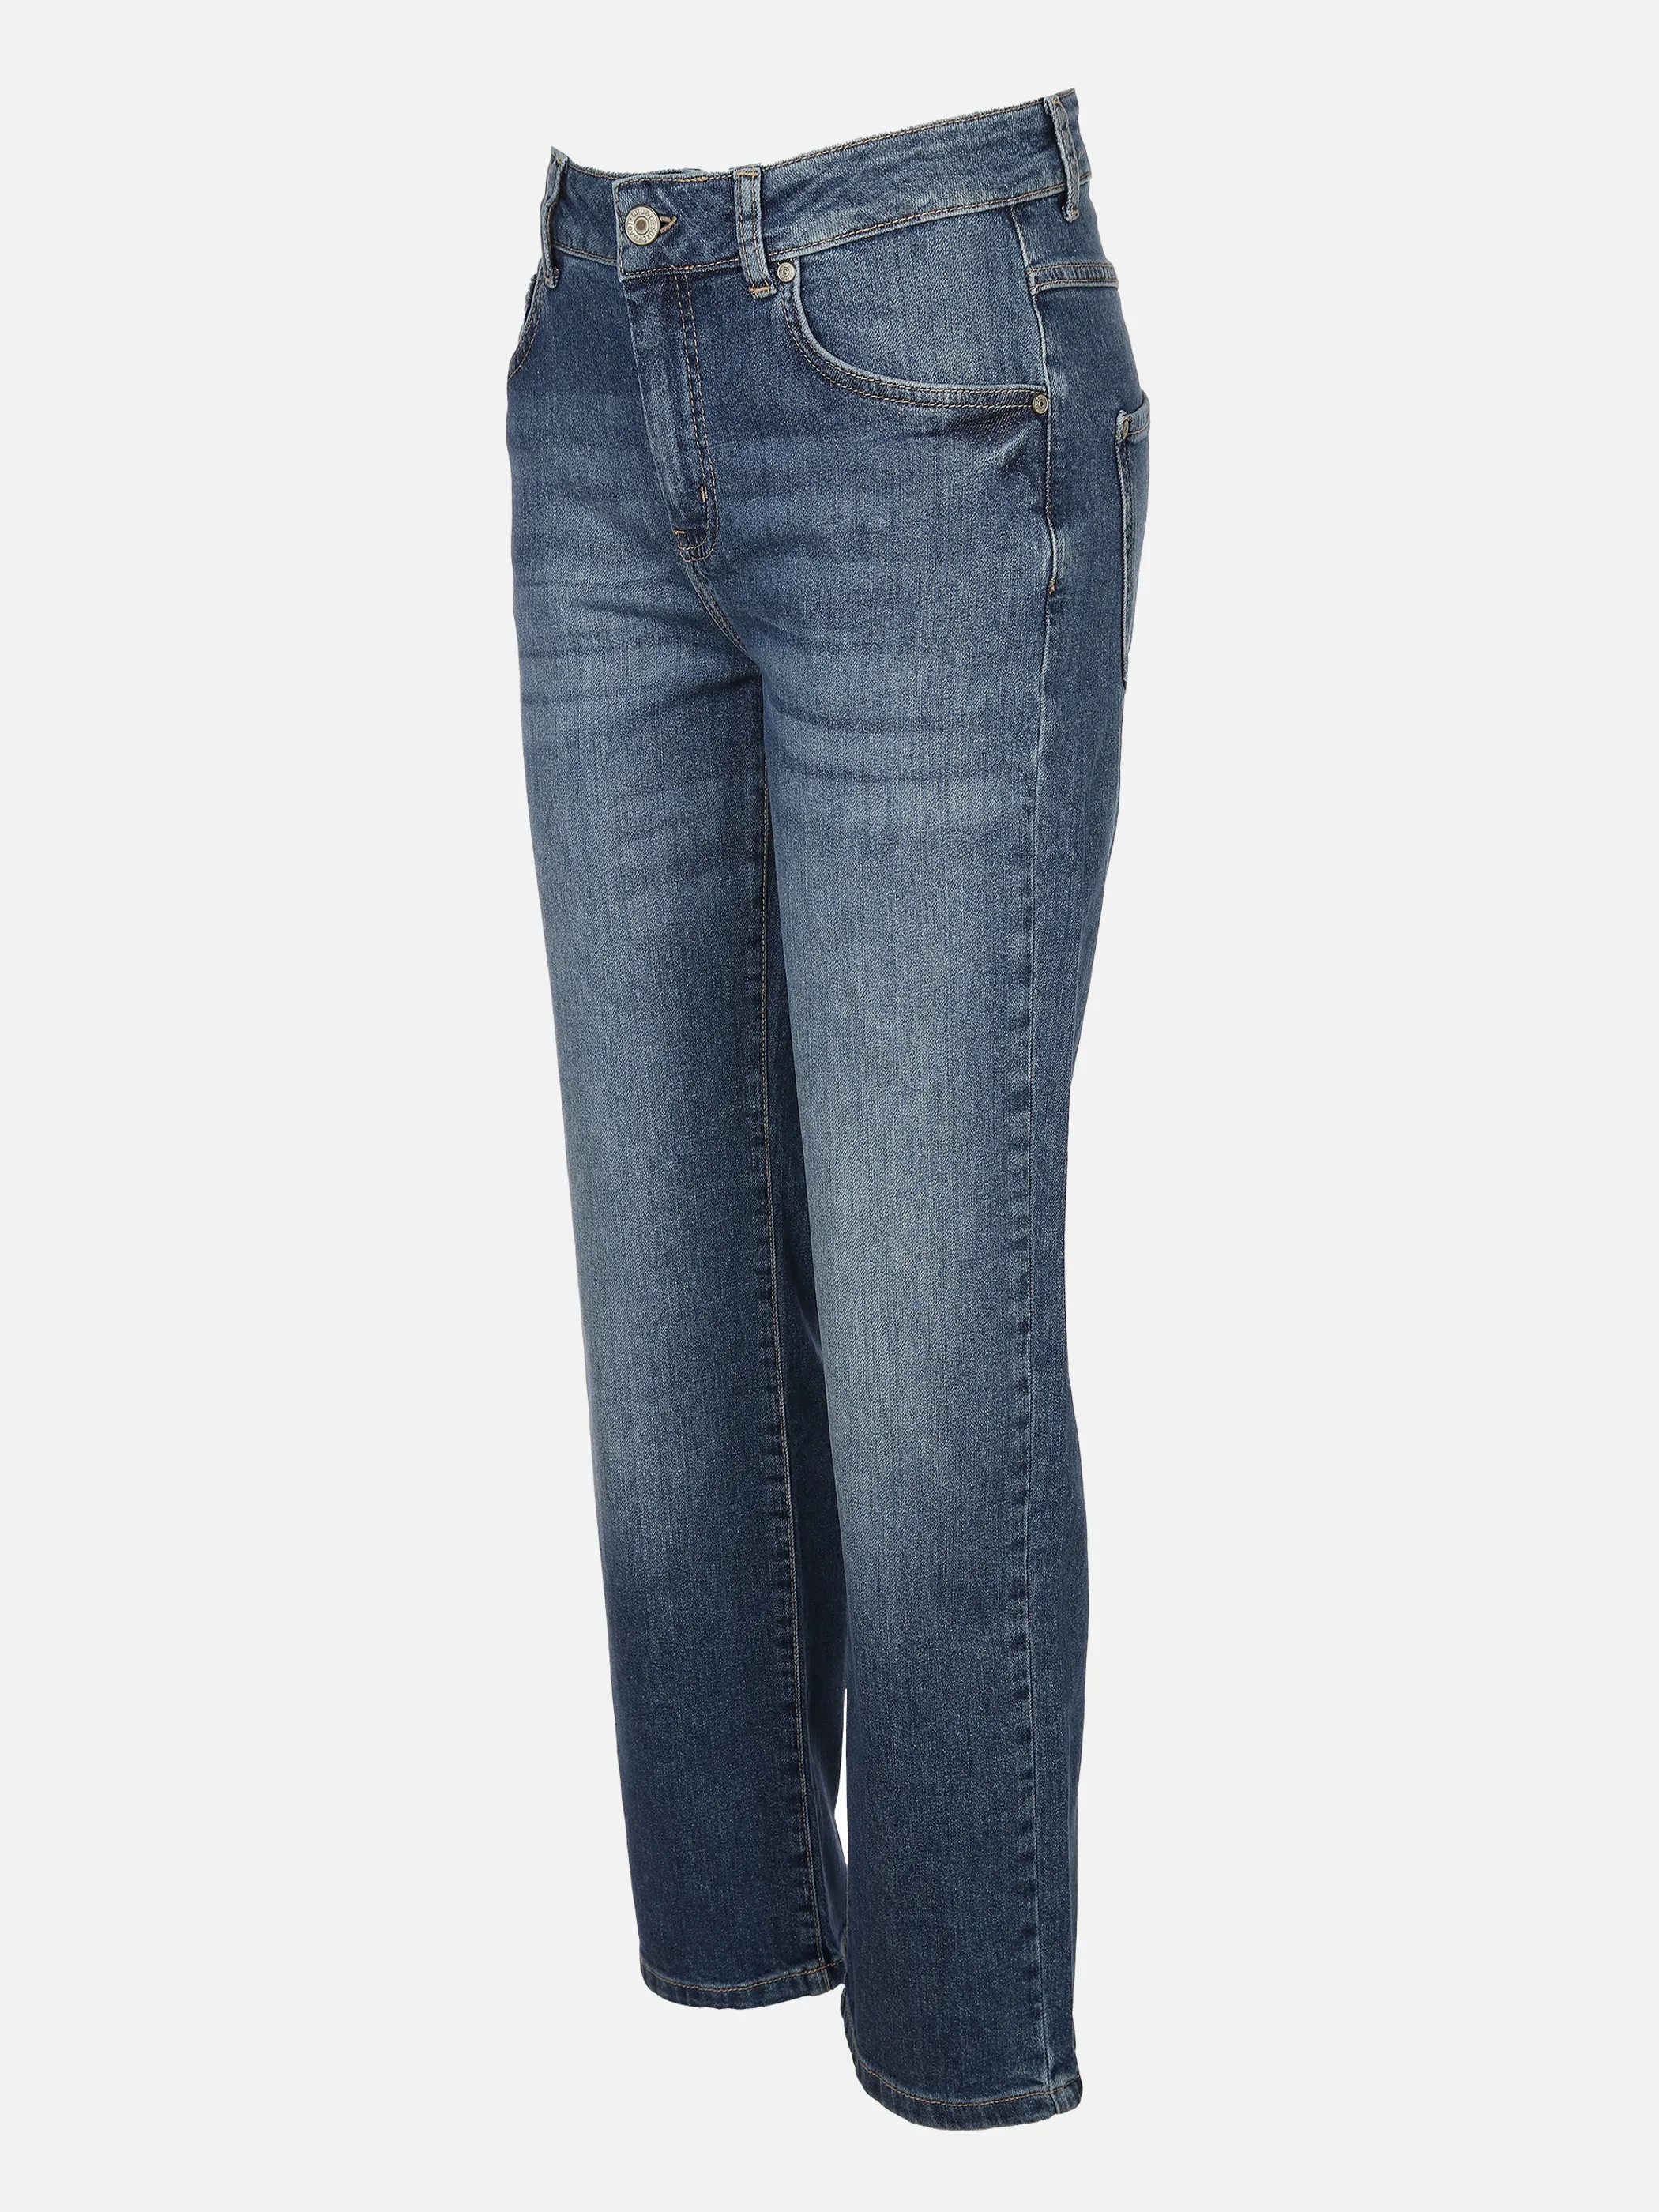 Sure Da-Jeans modern straight fit Blau 877968 MIDBLUE 3